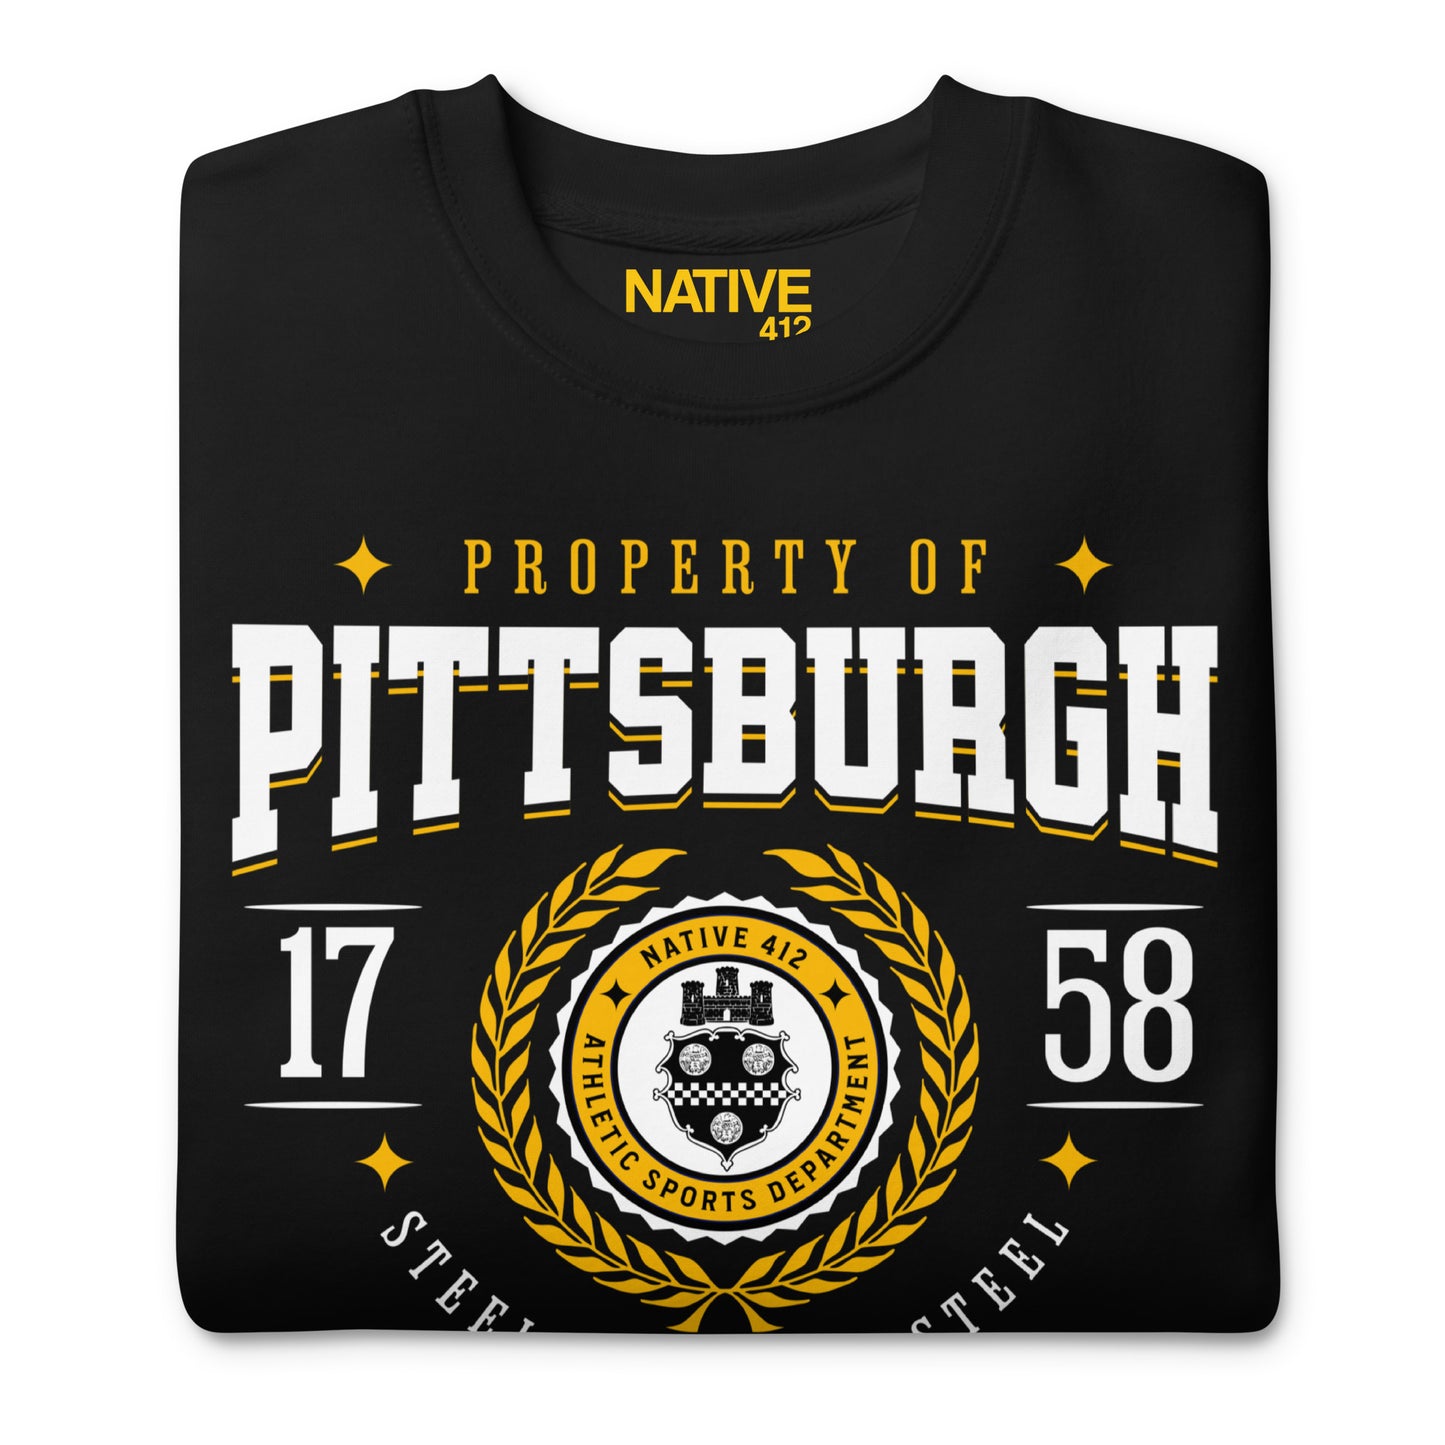 Property of Pittsburgh -Steel Sharpens Steel Unisex Premium Sweatshirt